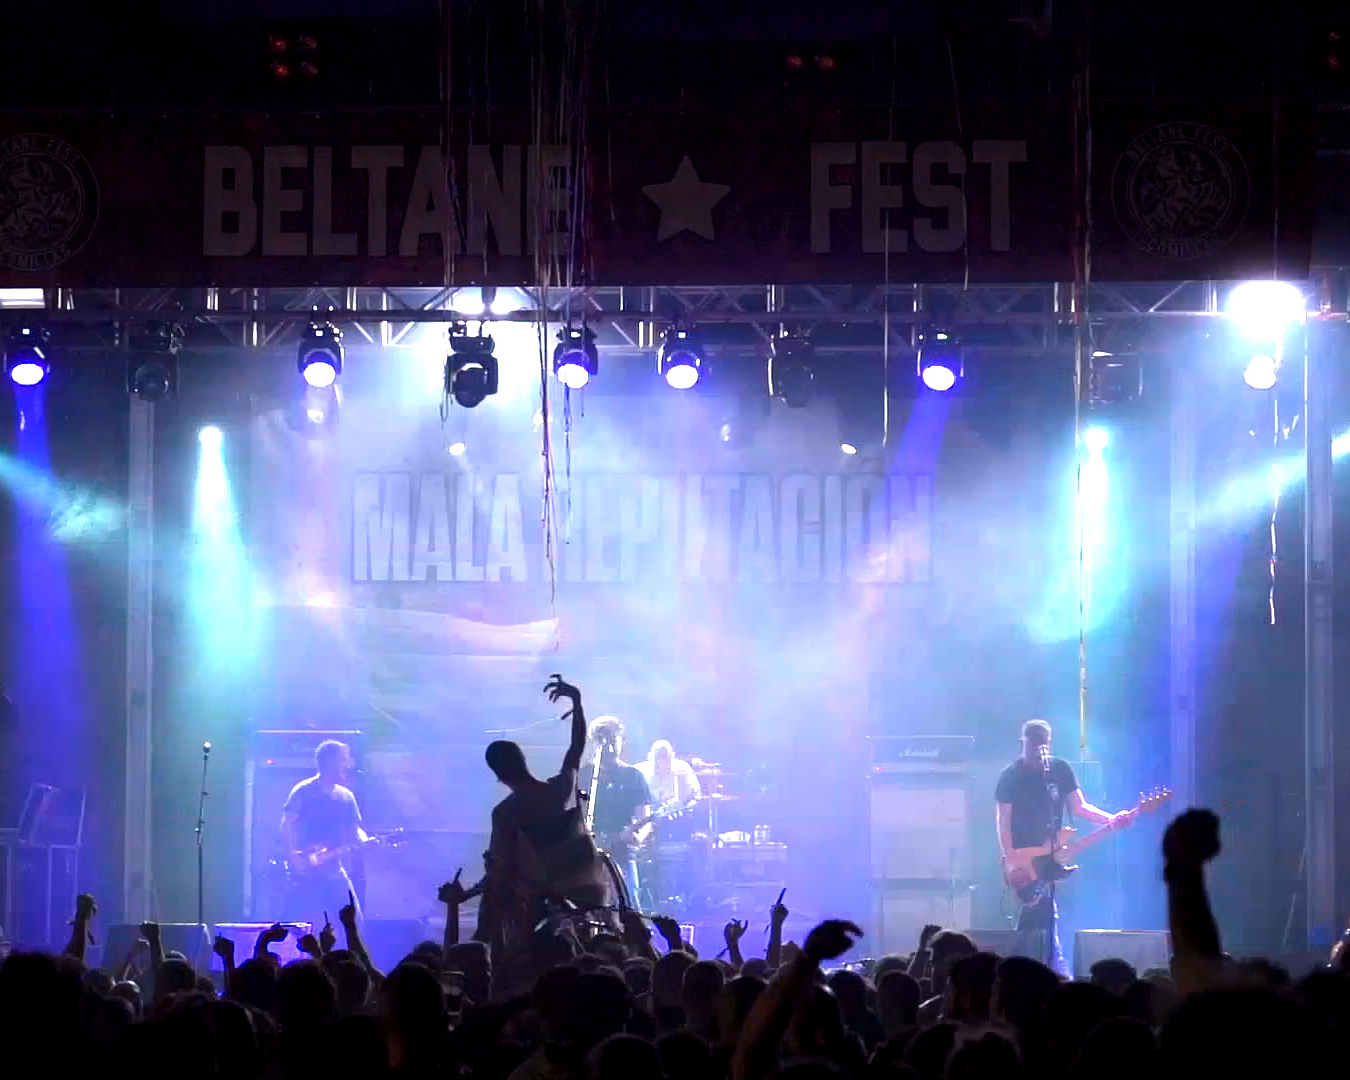 Beltane Fest